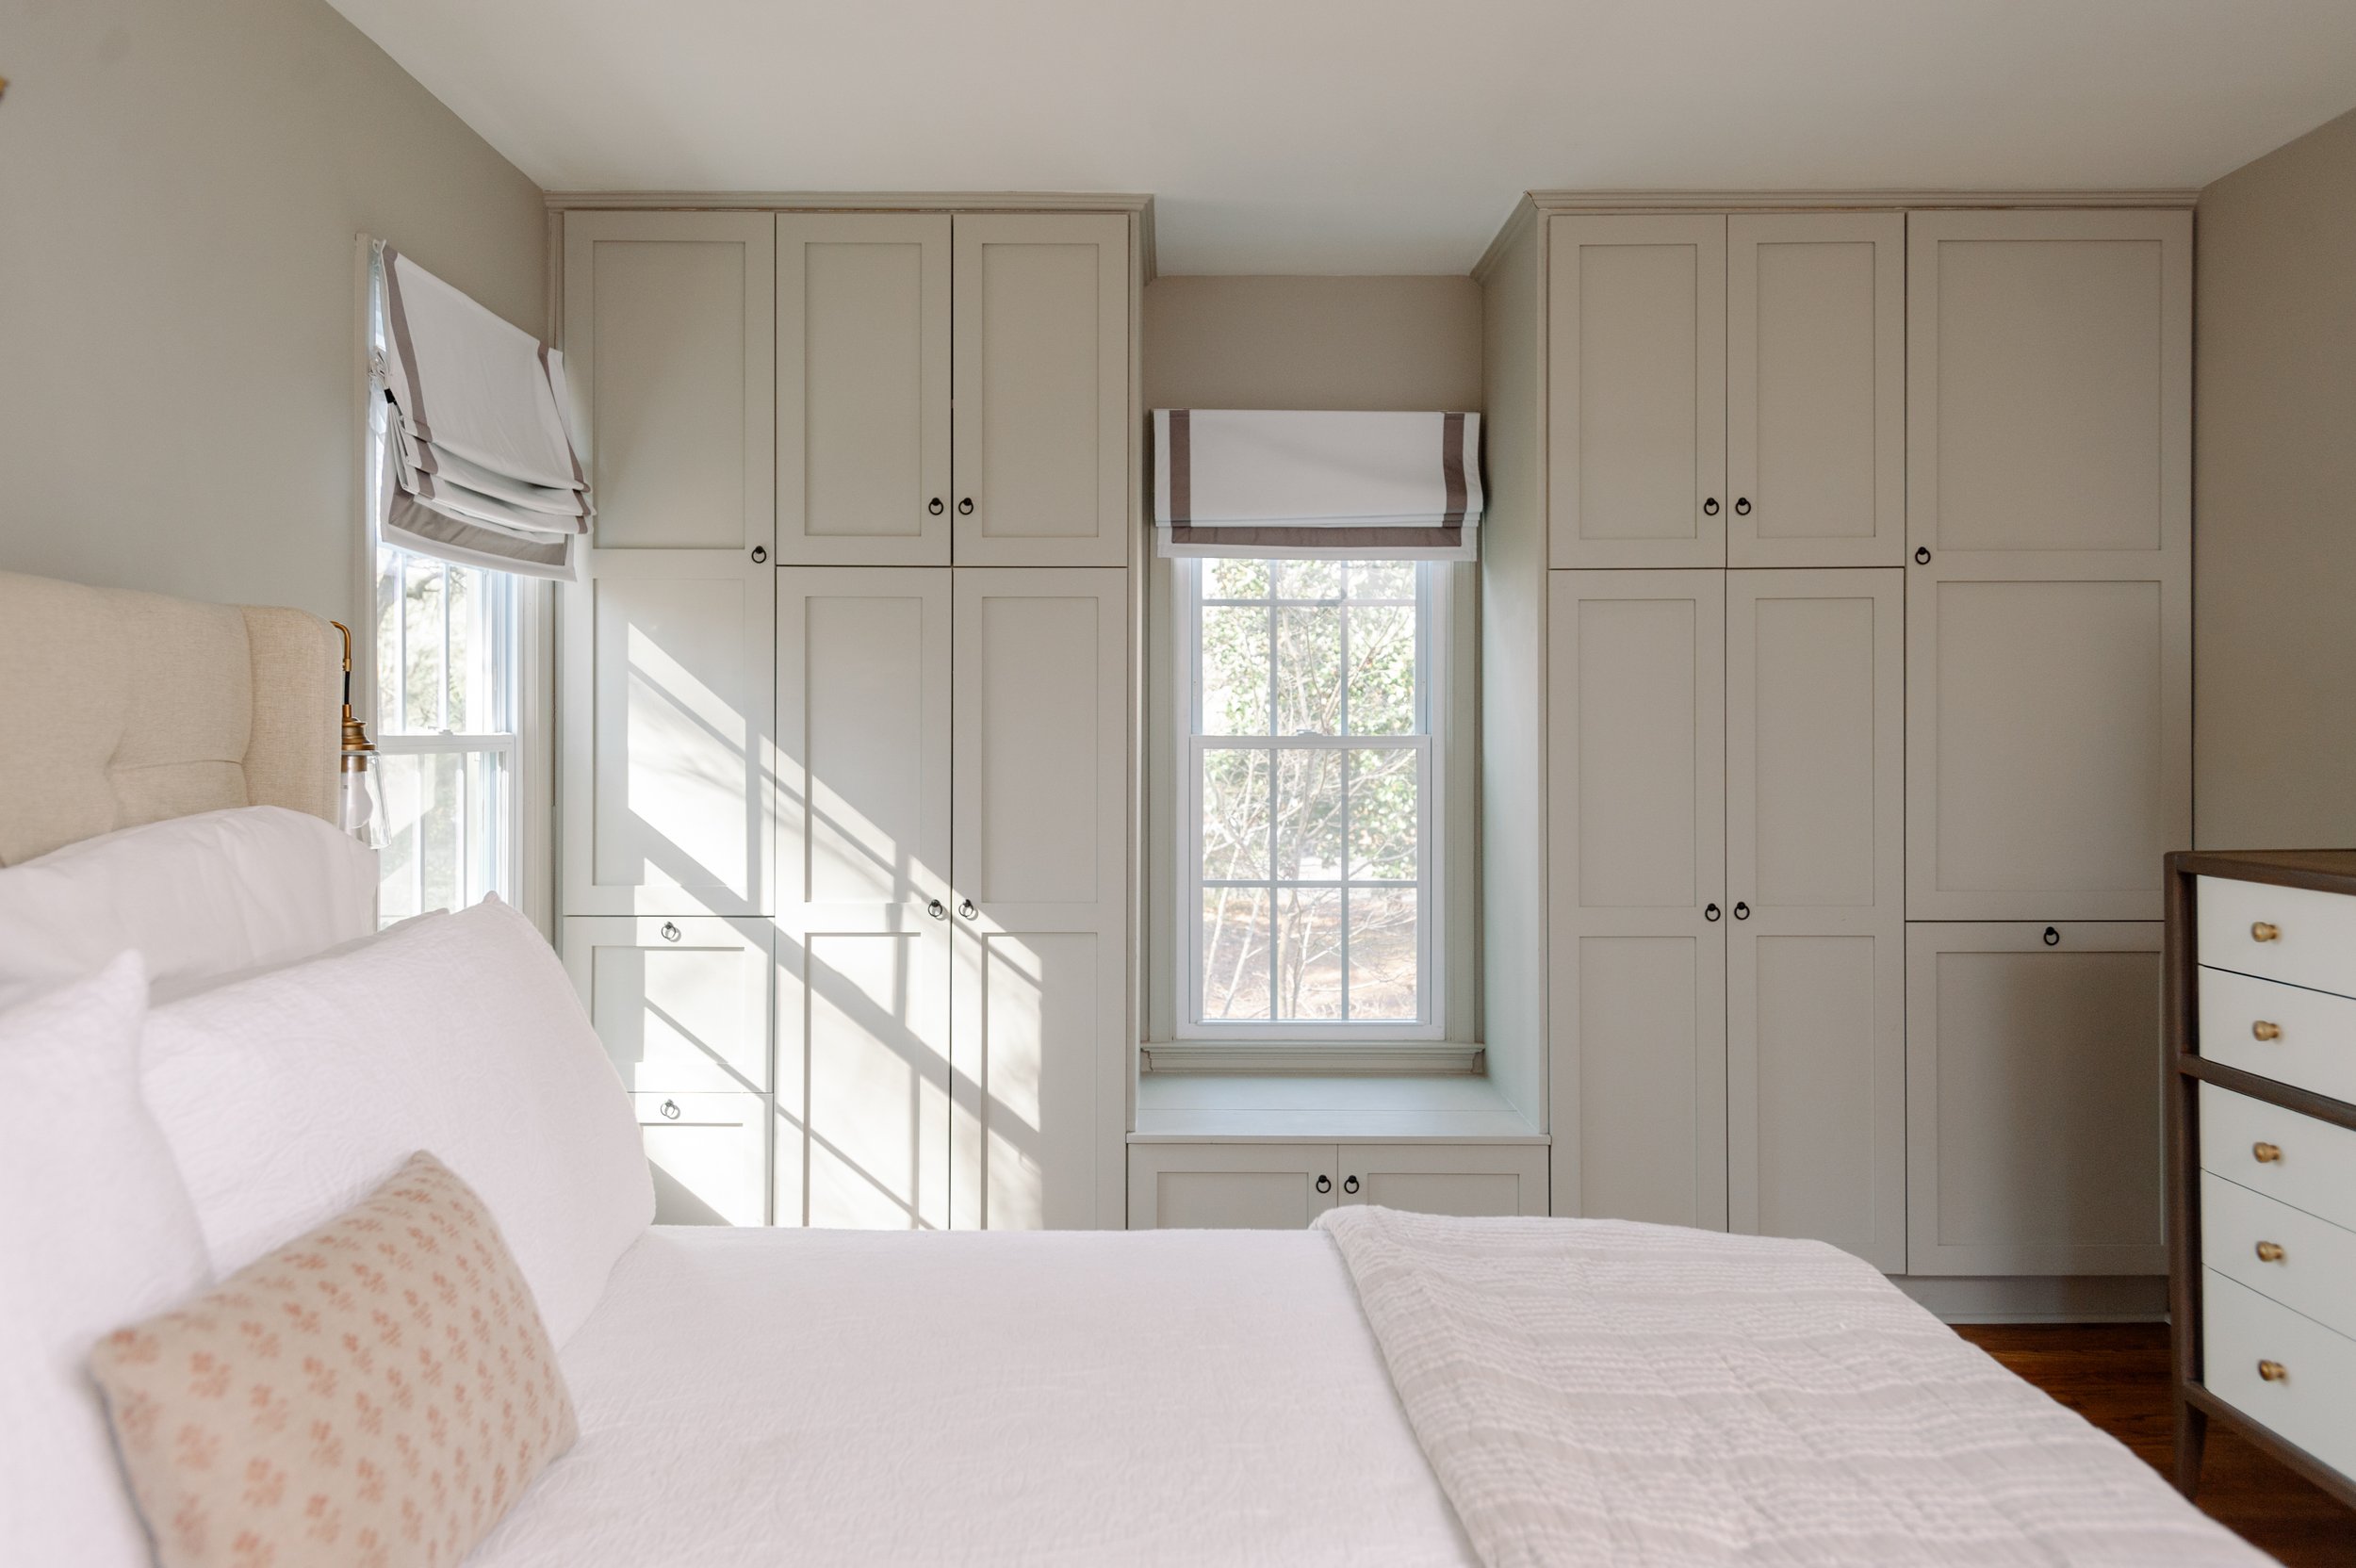 Built In Closets in Bedroom, DIY Ikea Cabinets with Semihandmade Doors, Sherwin Williams Mindful Gray Bedroom